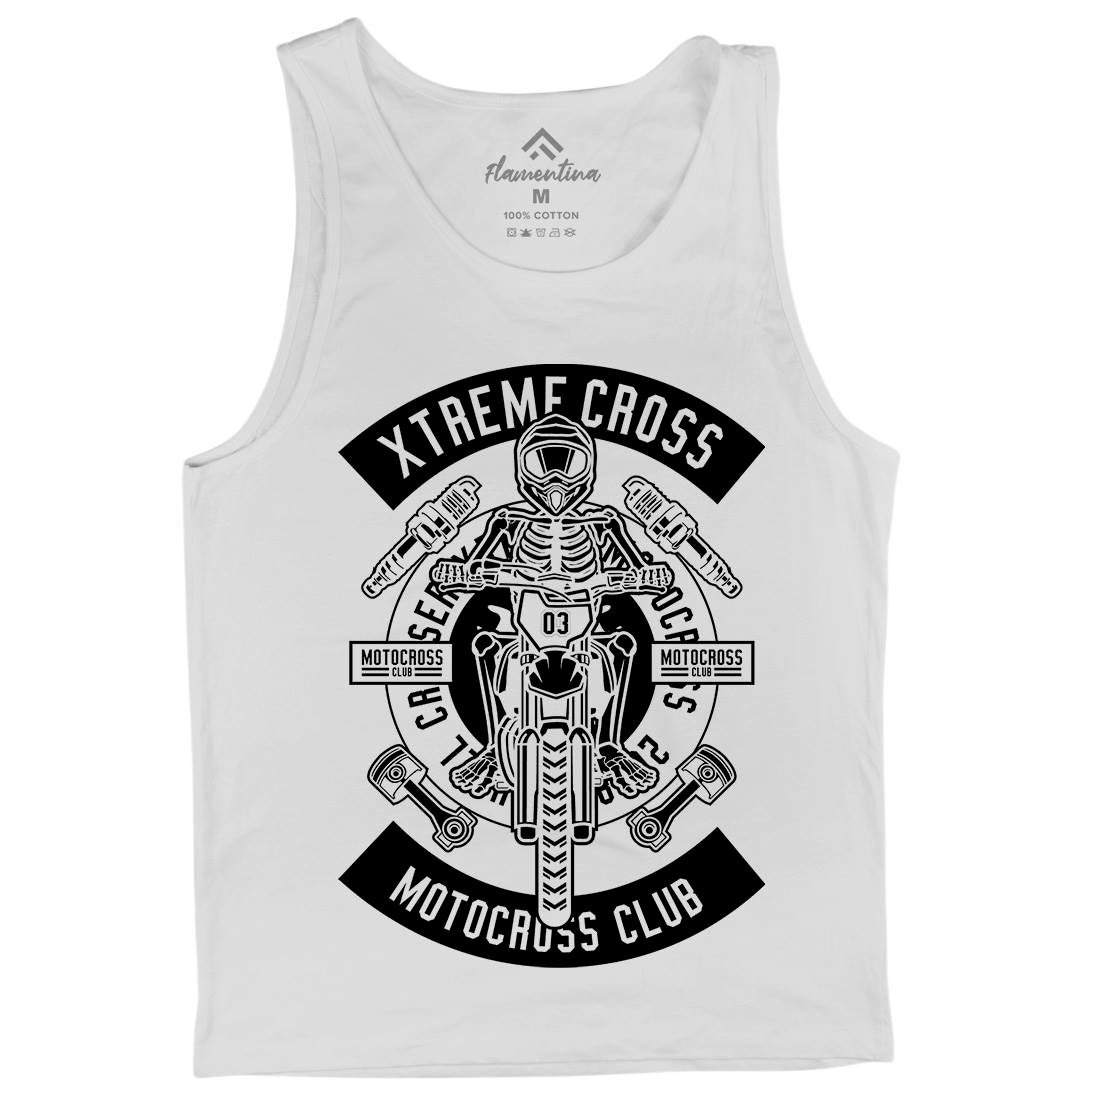 Xtreme Cross Mens Tank Top Vest Motorcycles B676